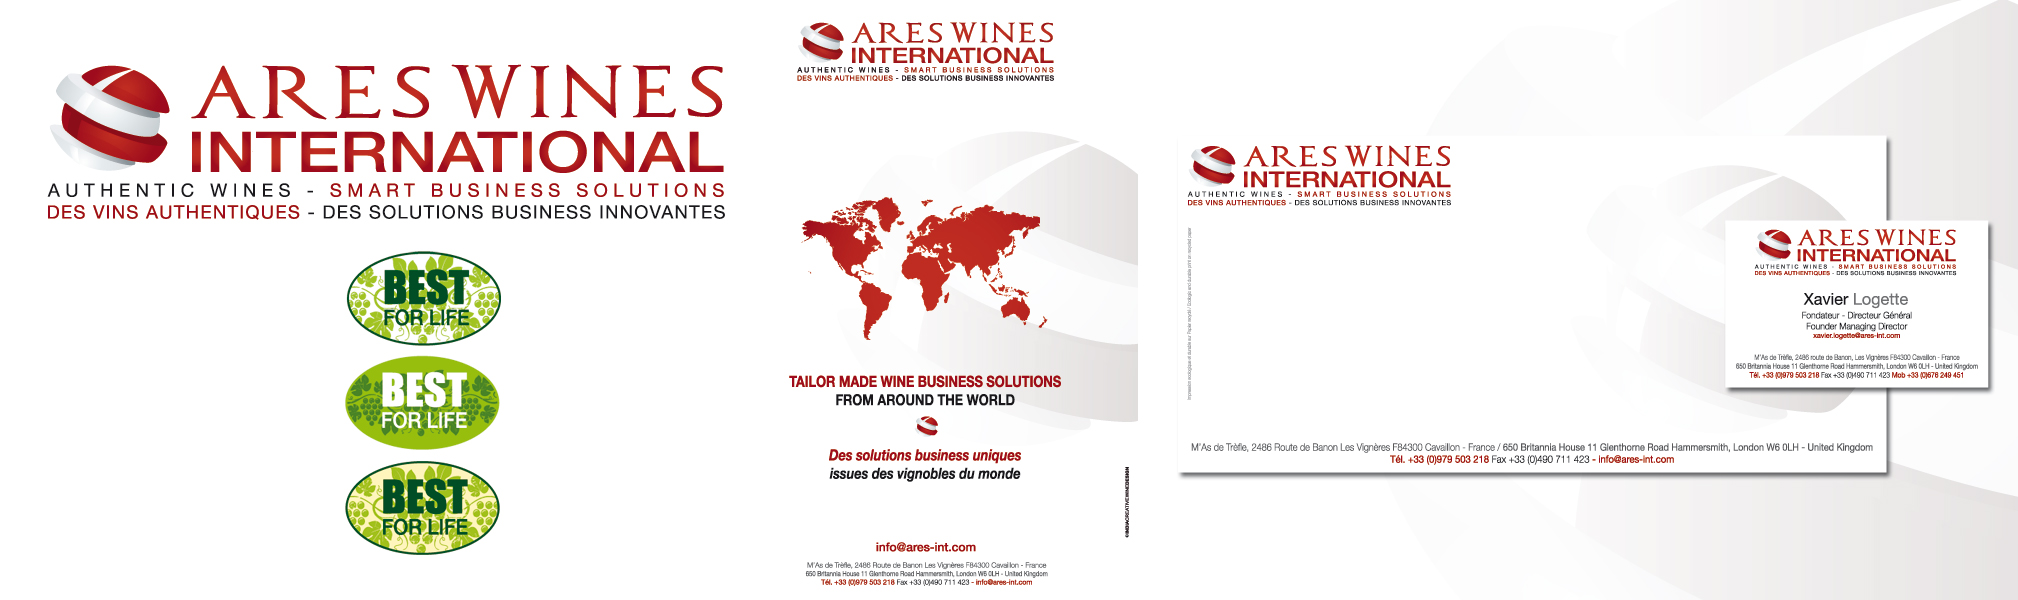 Ares Wines International - communication globale